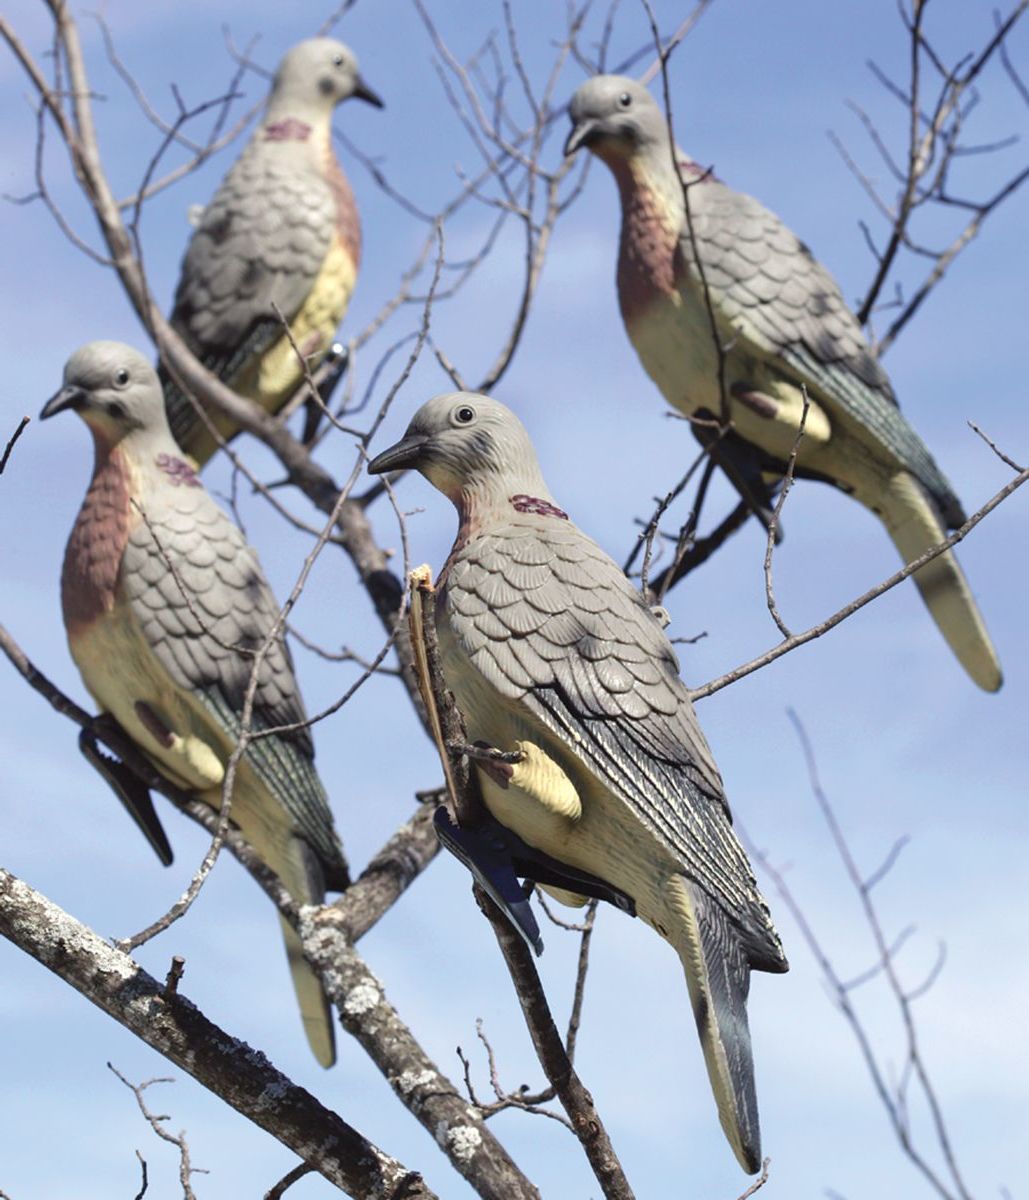 1 Dozen Realistic Hollow Pigeon Decoy Dove Decoys for Garden Decorative/Hunting